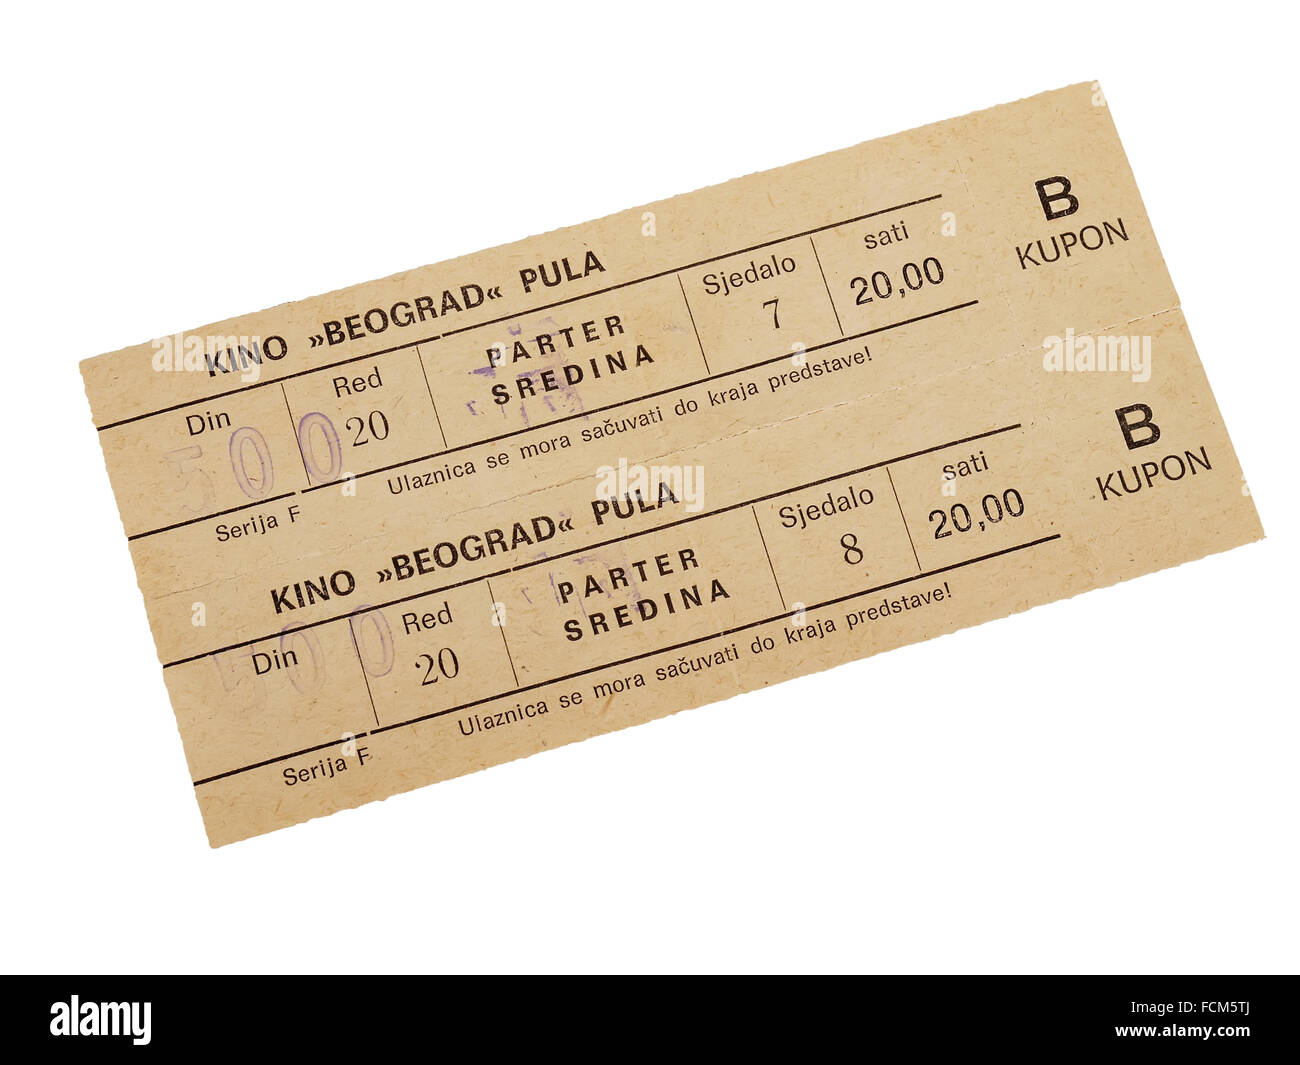 Two old unused cinema tickets for cinema 'Beograd' in Pula, circa 1987 Stock Photo